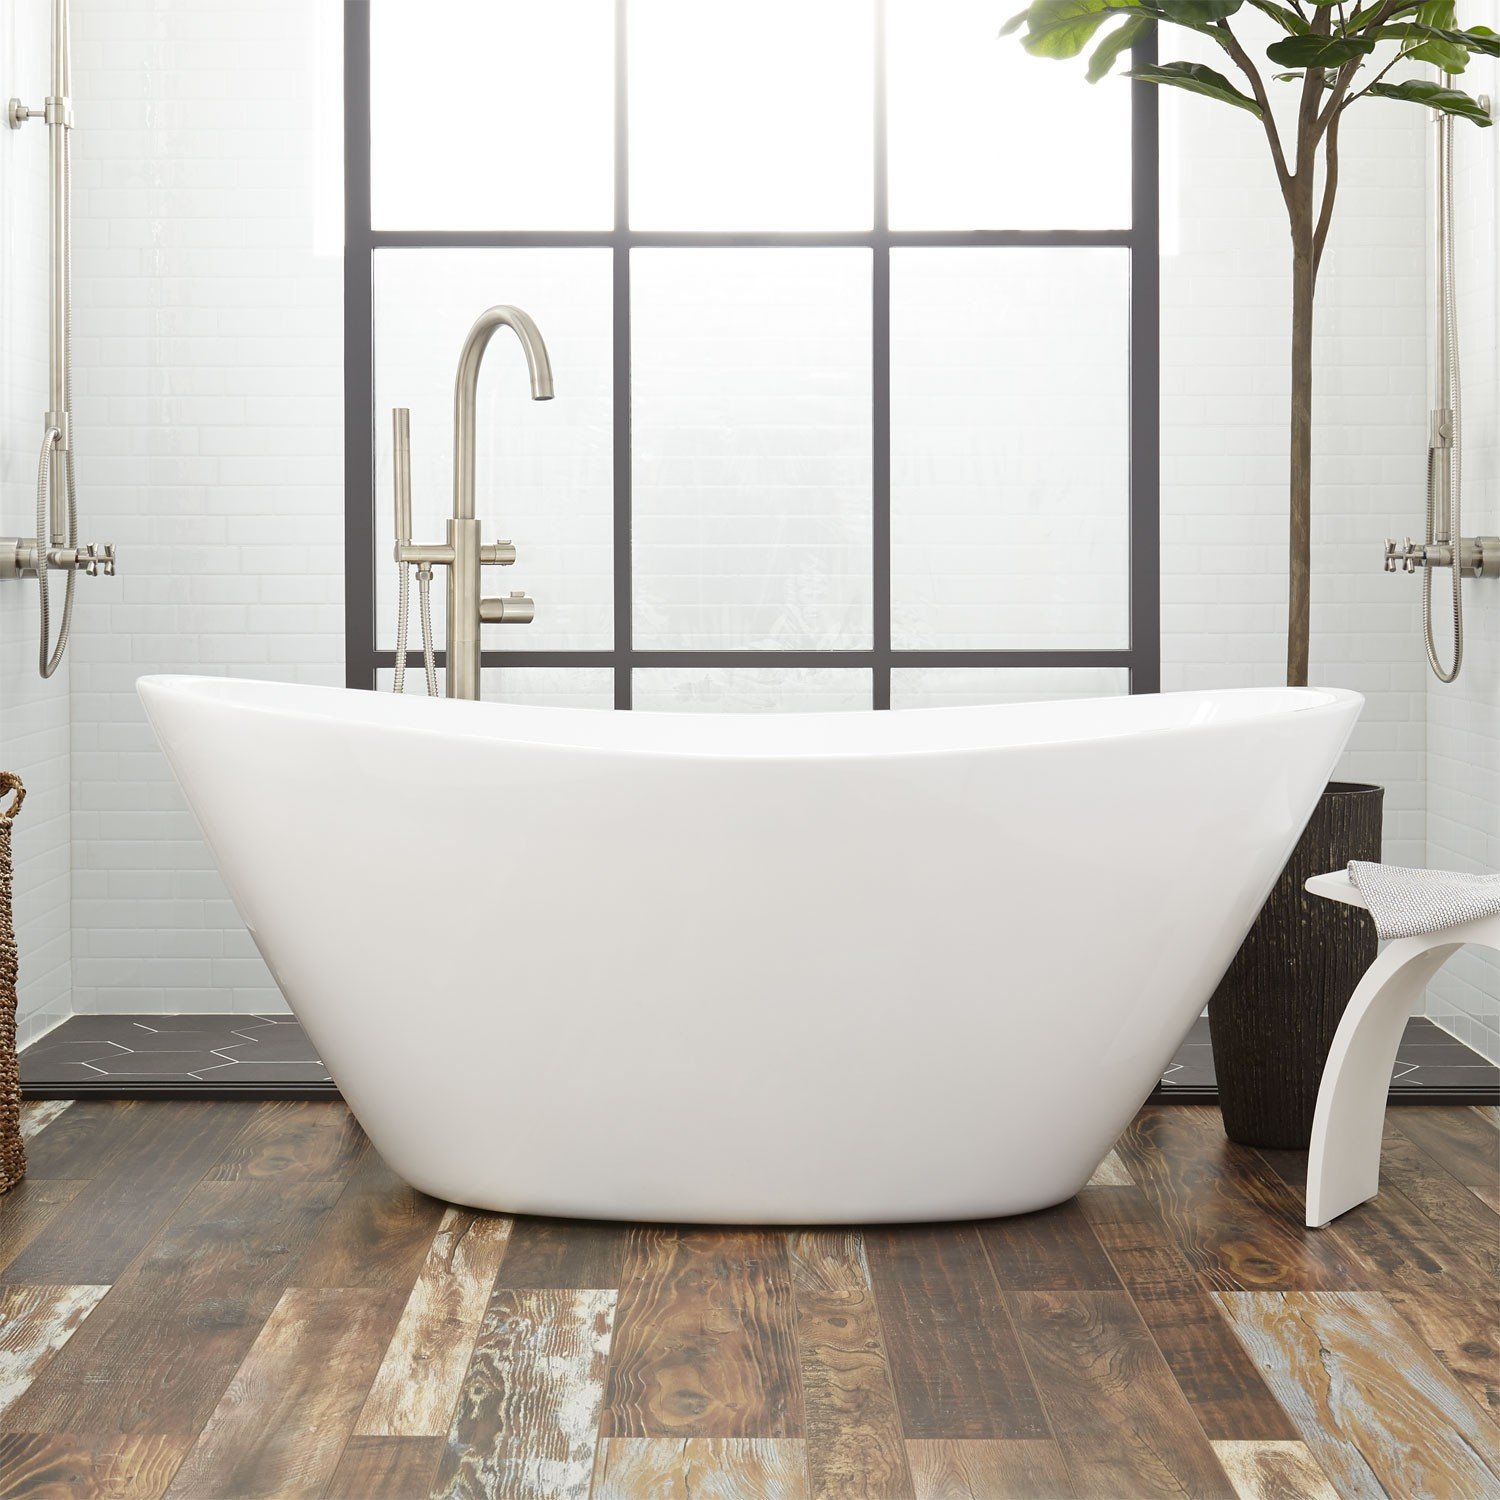 Benefits Of Freestanding Soaking Tubs, Make Bathtub Deeper